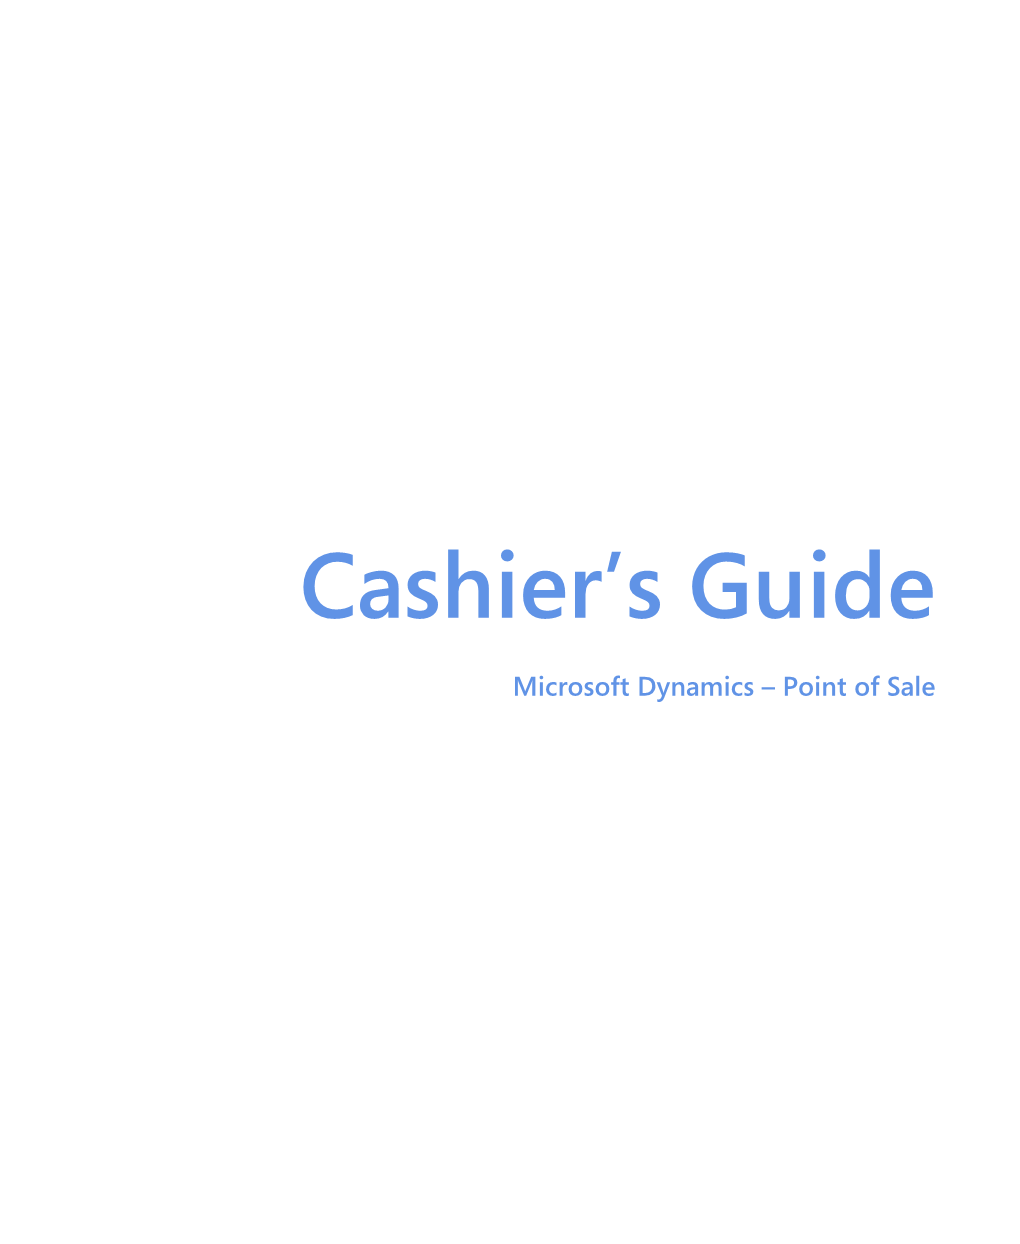 Cashier's Guide